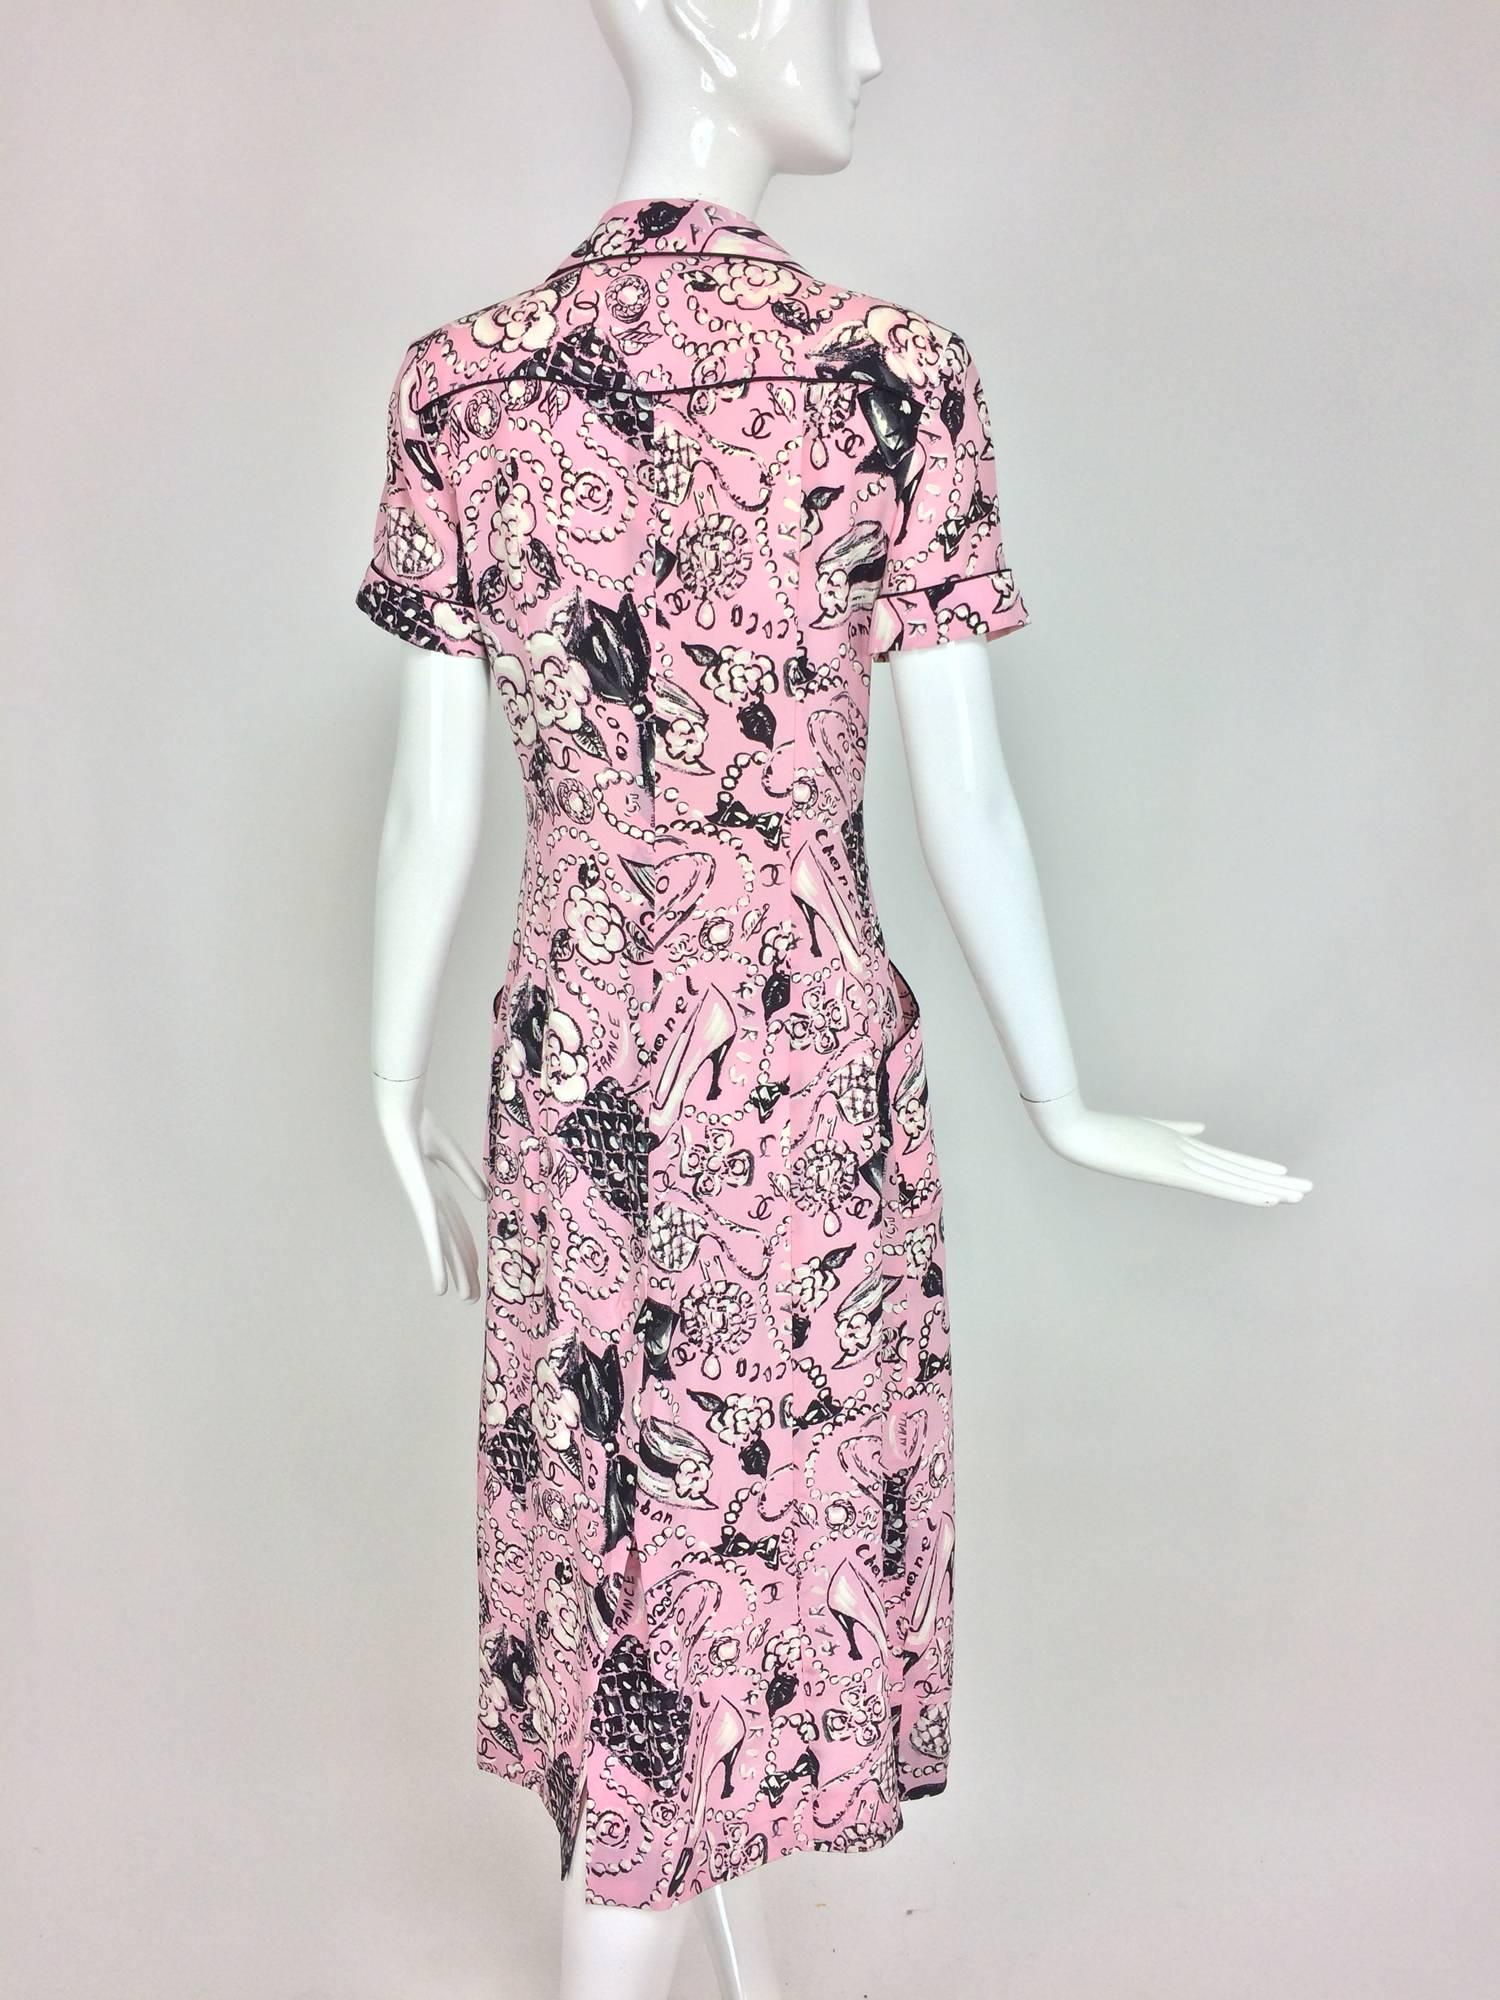 Gray Chanel Claudia Schiffer runway worn rare Coco print dress pink silk 1993